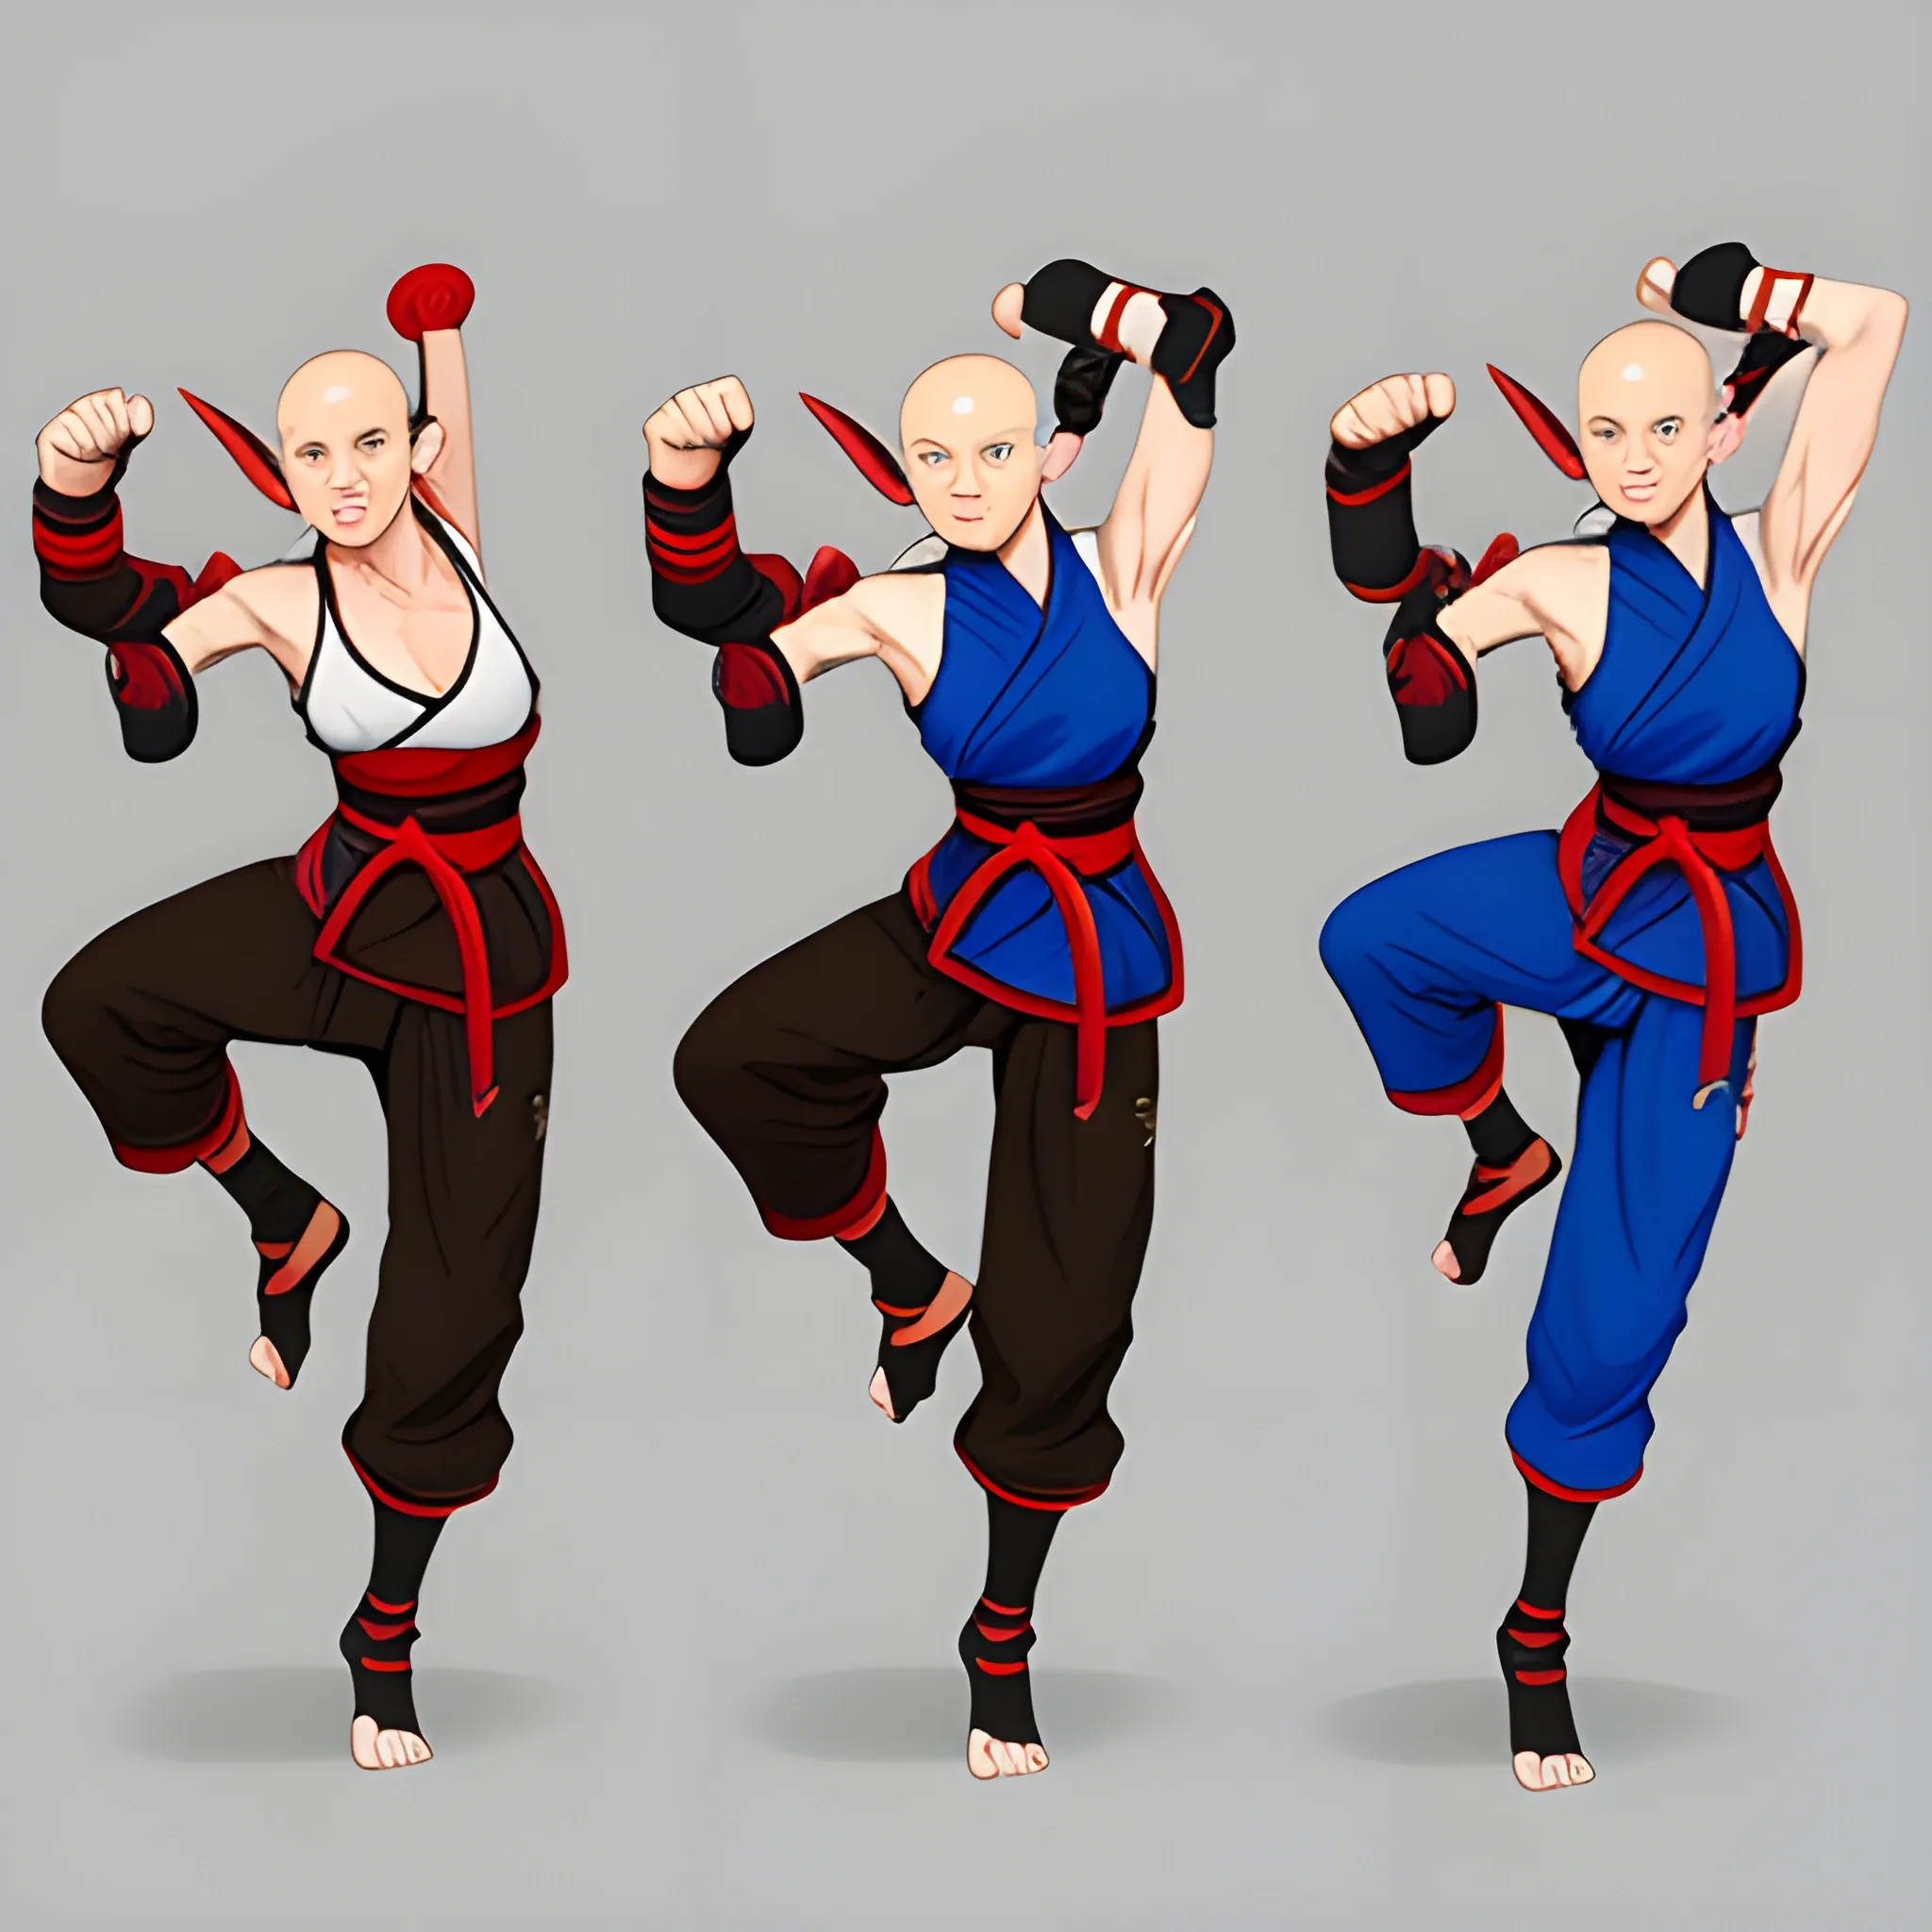 monk, martial artist, elf, female, fighting, kick, split, flexible, Cartoon